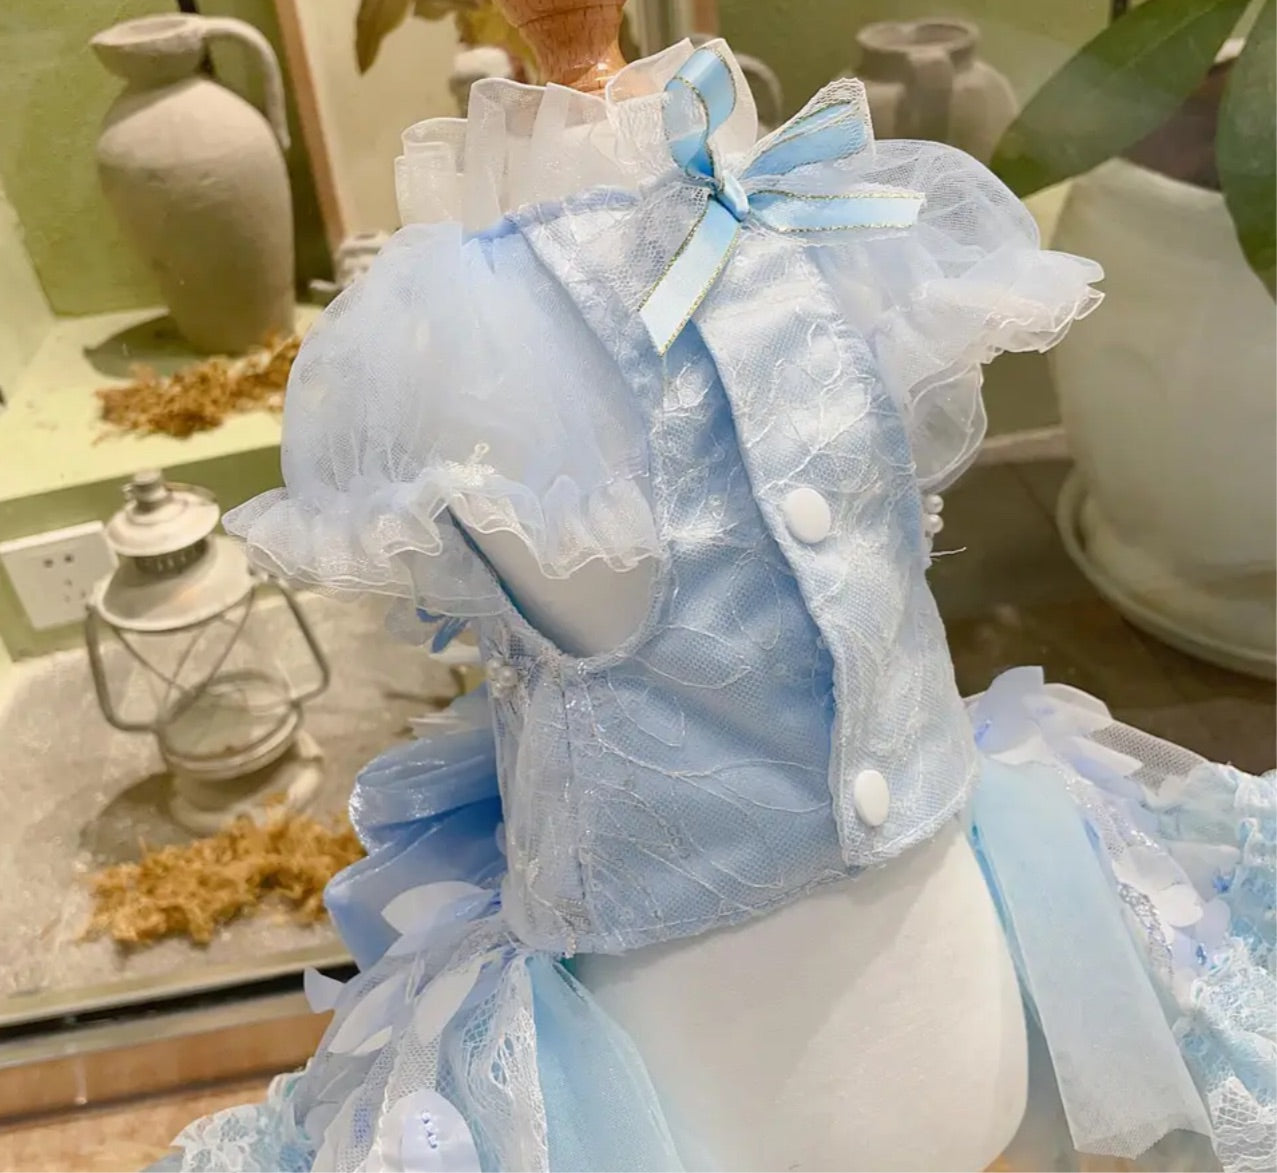 Handmade Ruffle Feather Dog Dress - Baby Blue